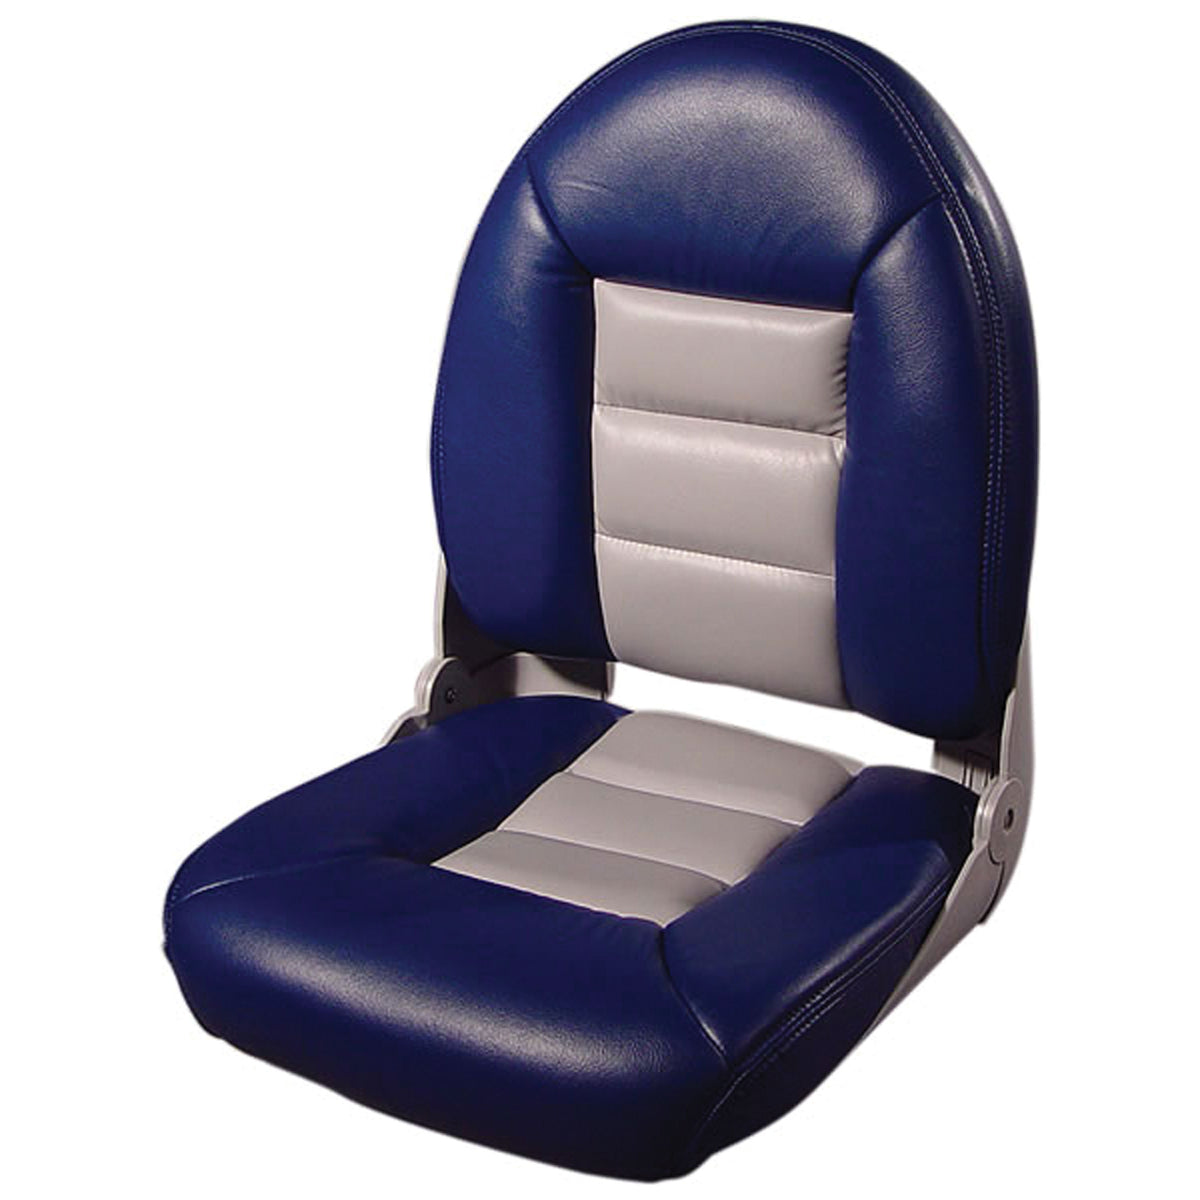 Tempress 54901 Navistyle High-Back Boat Seat - Blue/Gray